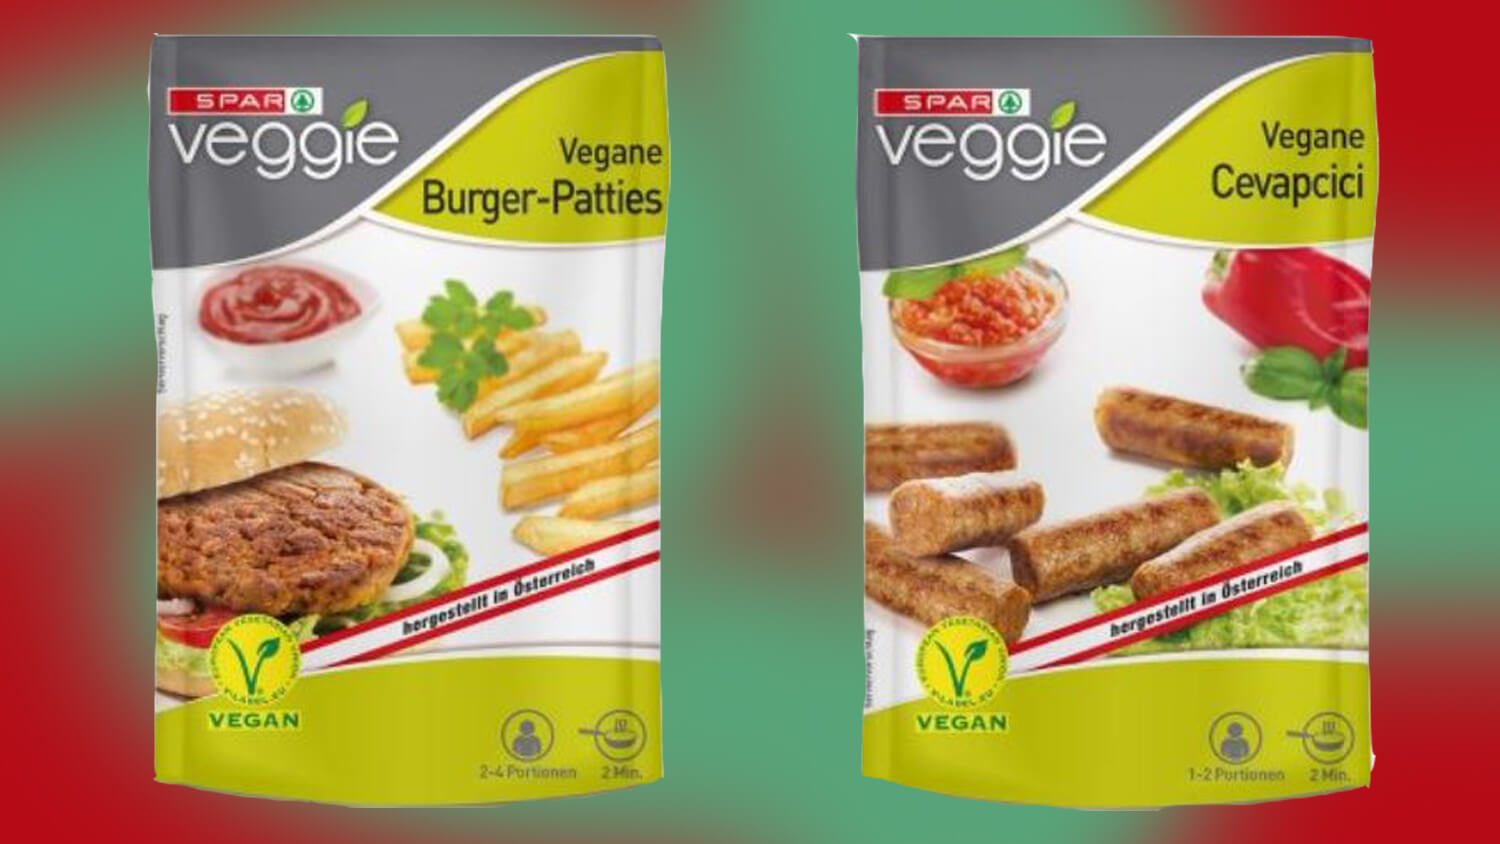 Spar Austria Supermarket Launches Own-Brand Frozen Vegan Meat Range